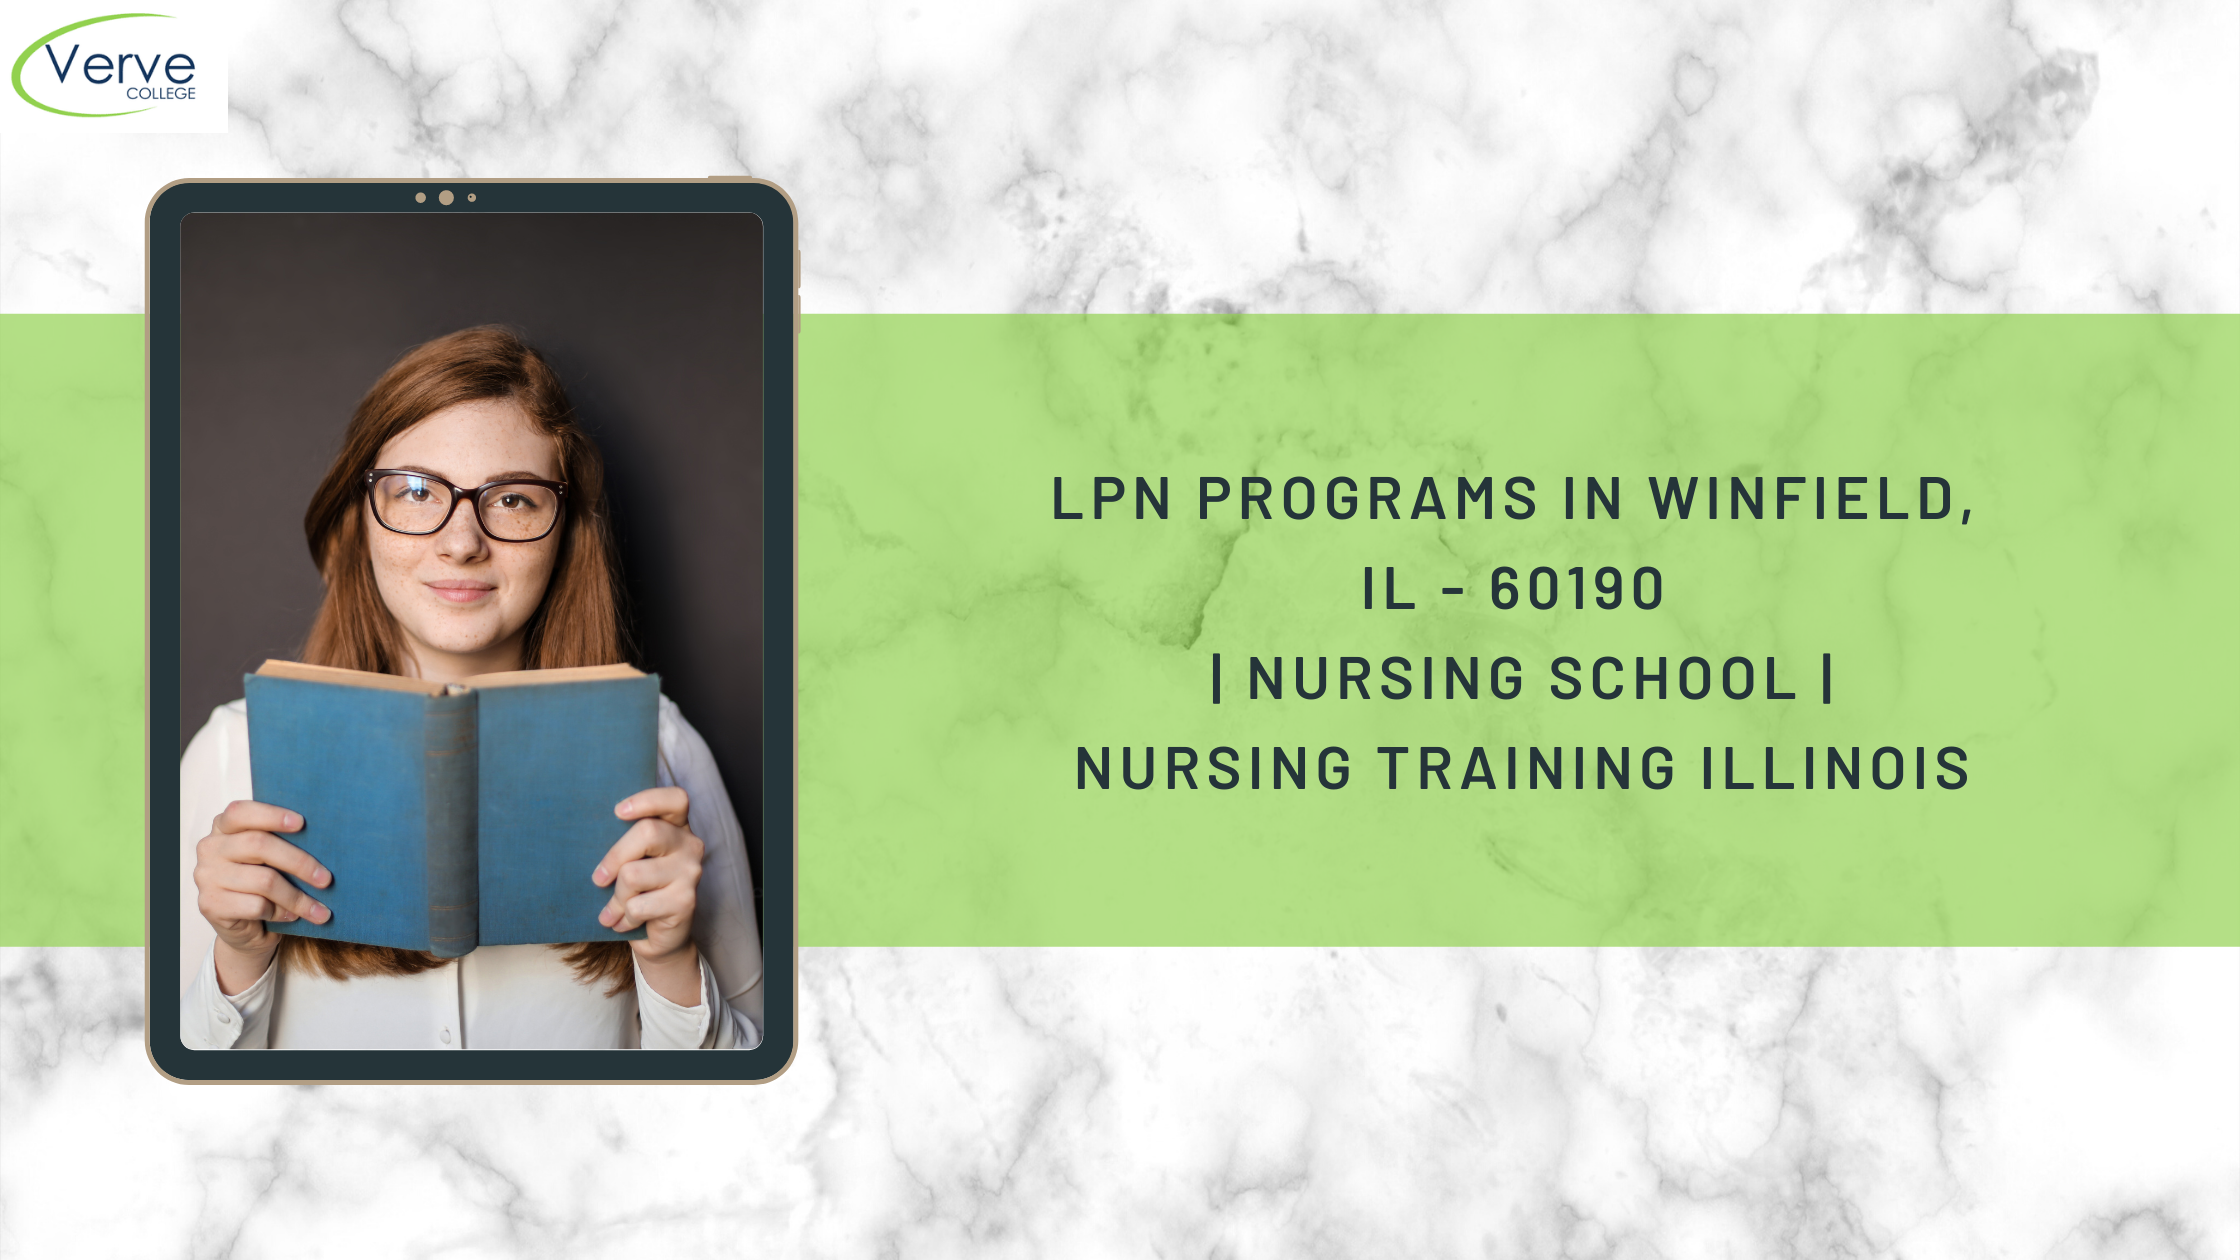 LPN Programs in Winfield, IL – 60190 | Nursing School | Nursing Training Illinois